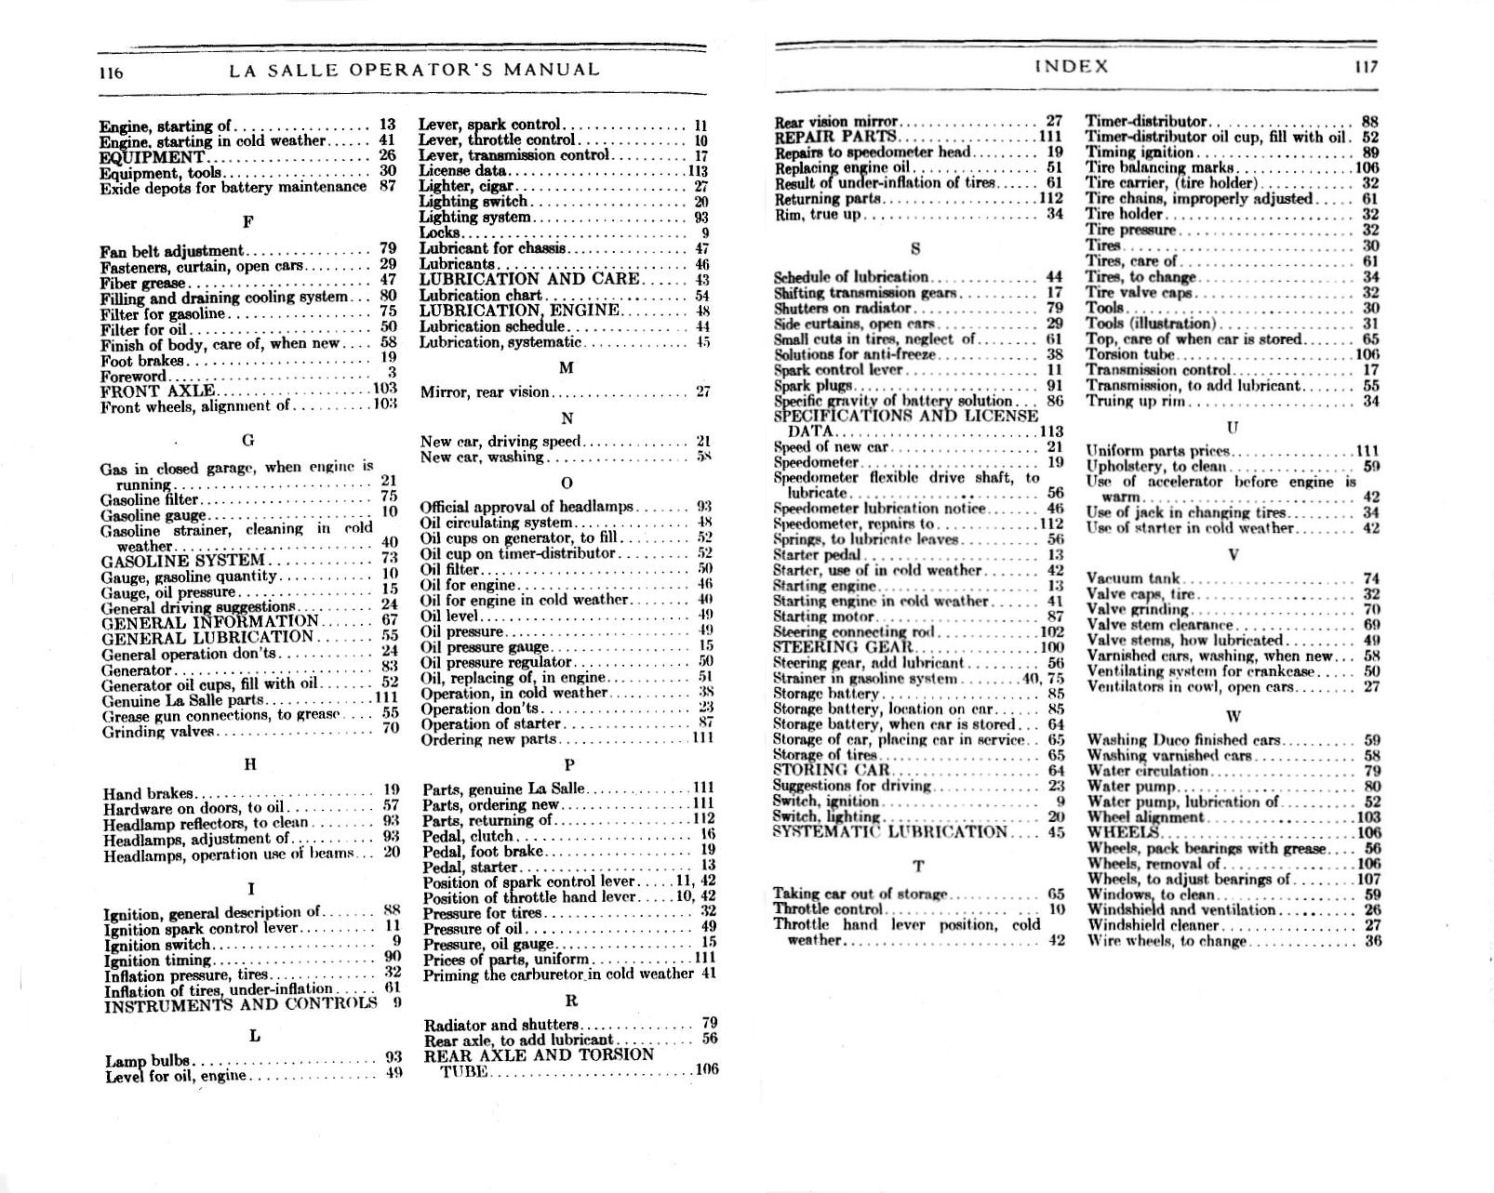 1927_LaSalle_Manual-116-117